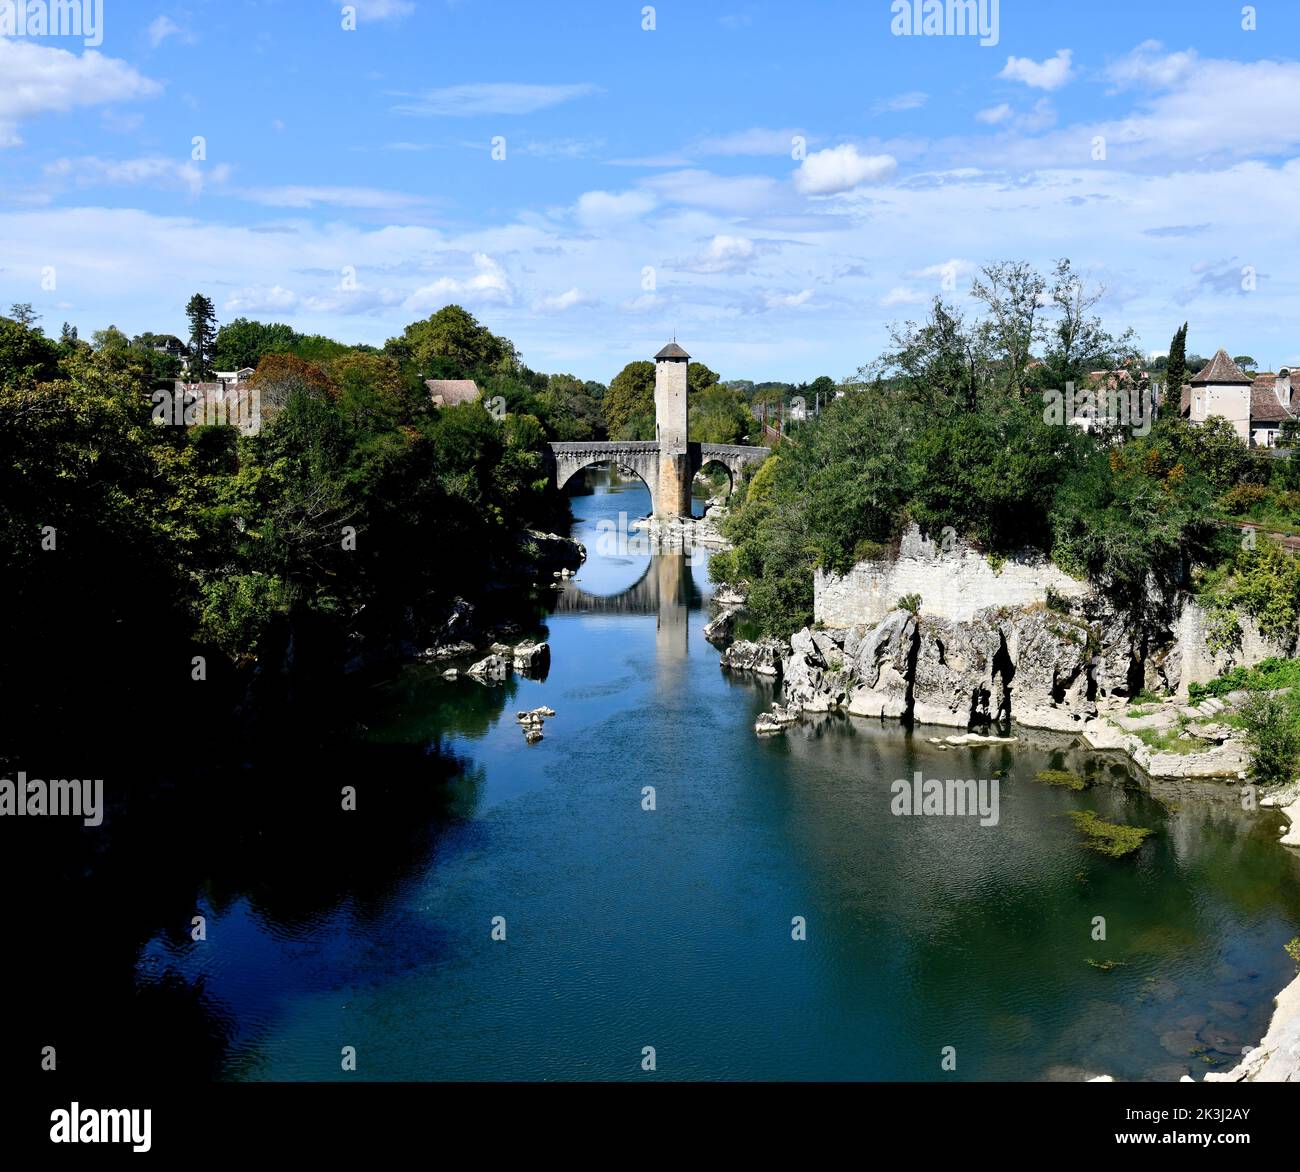 The old Roman bridge Orthez, France Stock Photo